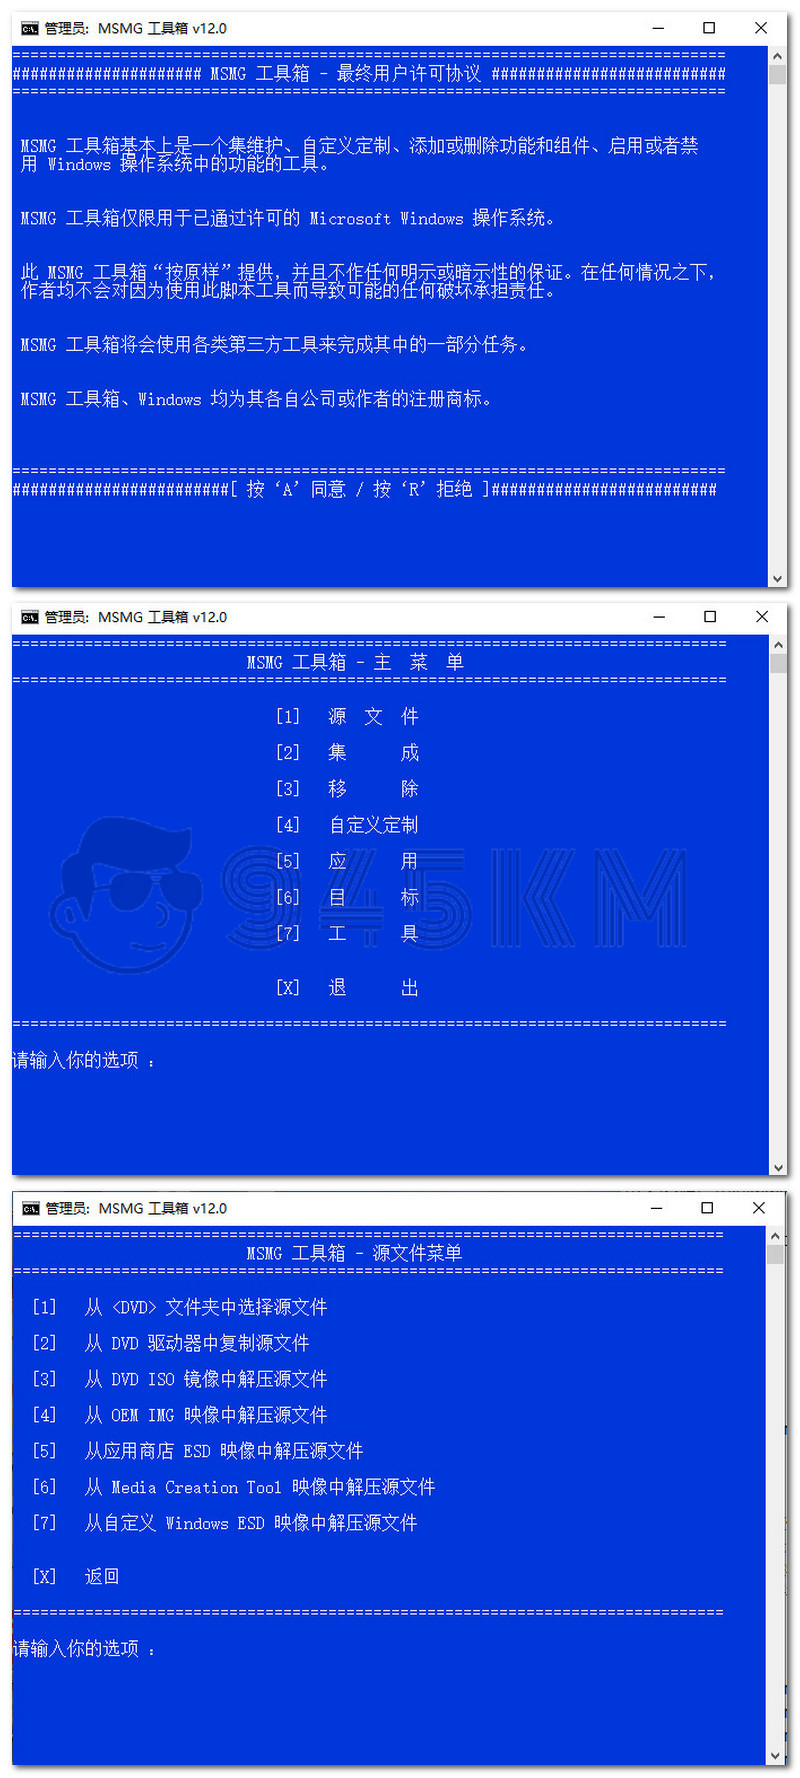 【Windows】系统映像工具箱MSMG ToolKit_v12.0 中文版插图